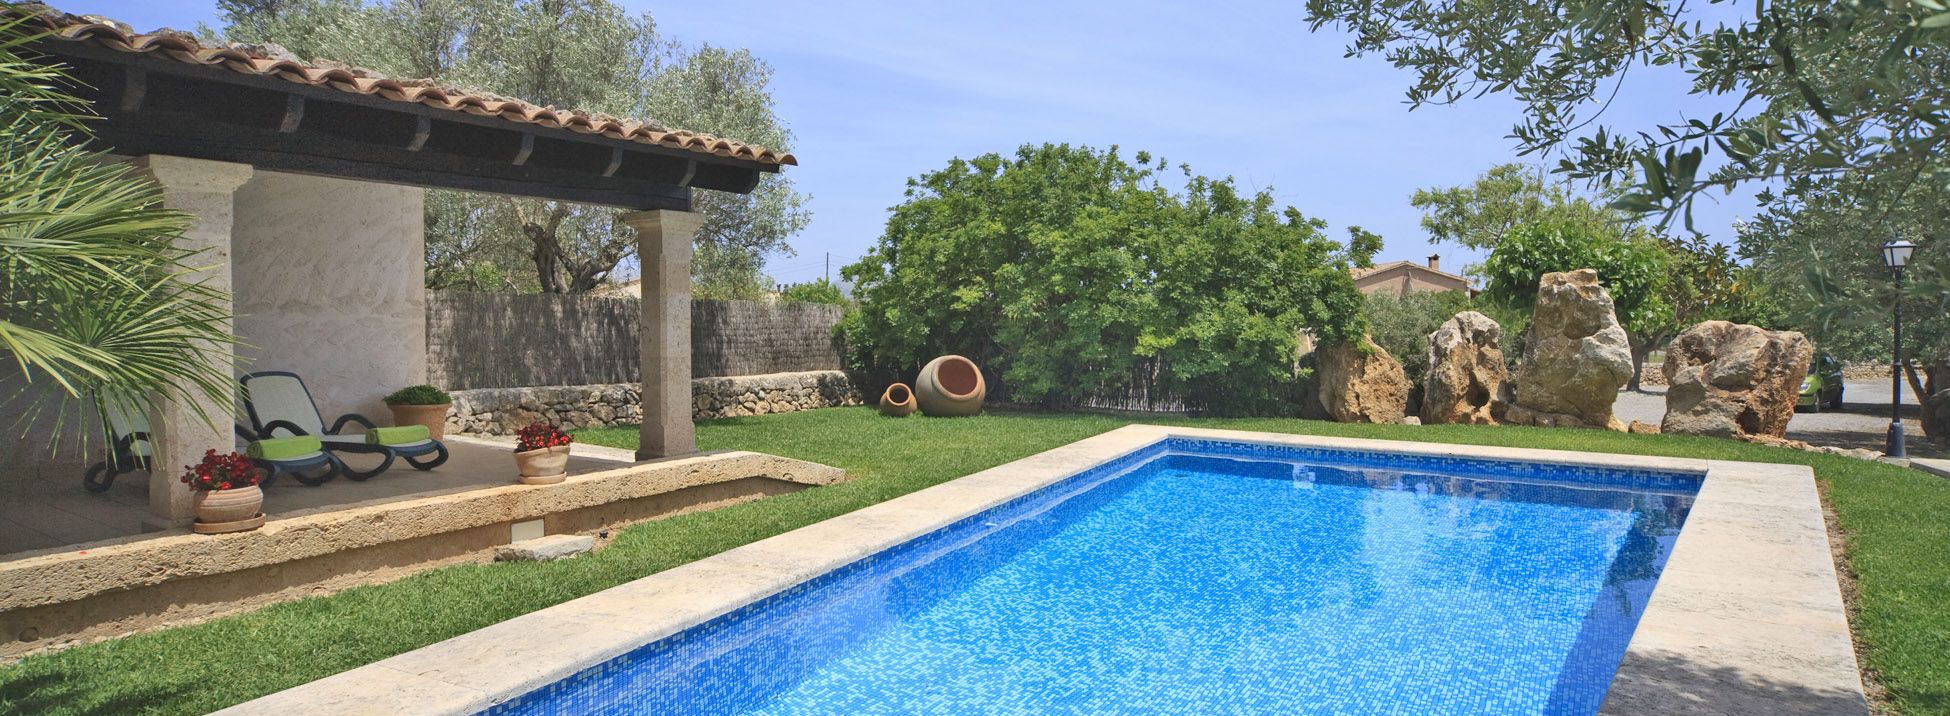 Ferienhaus Mallorca MA3160 - Terrasse mit Pool